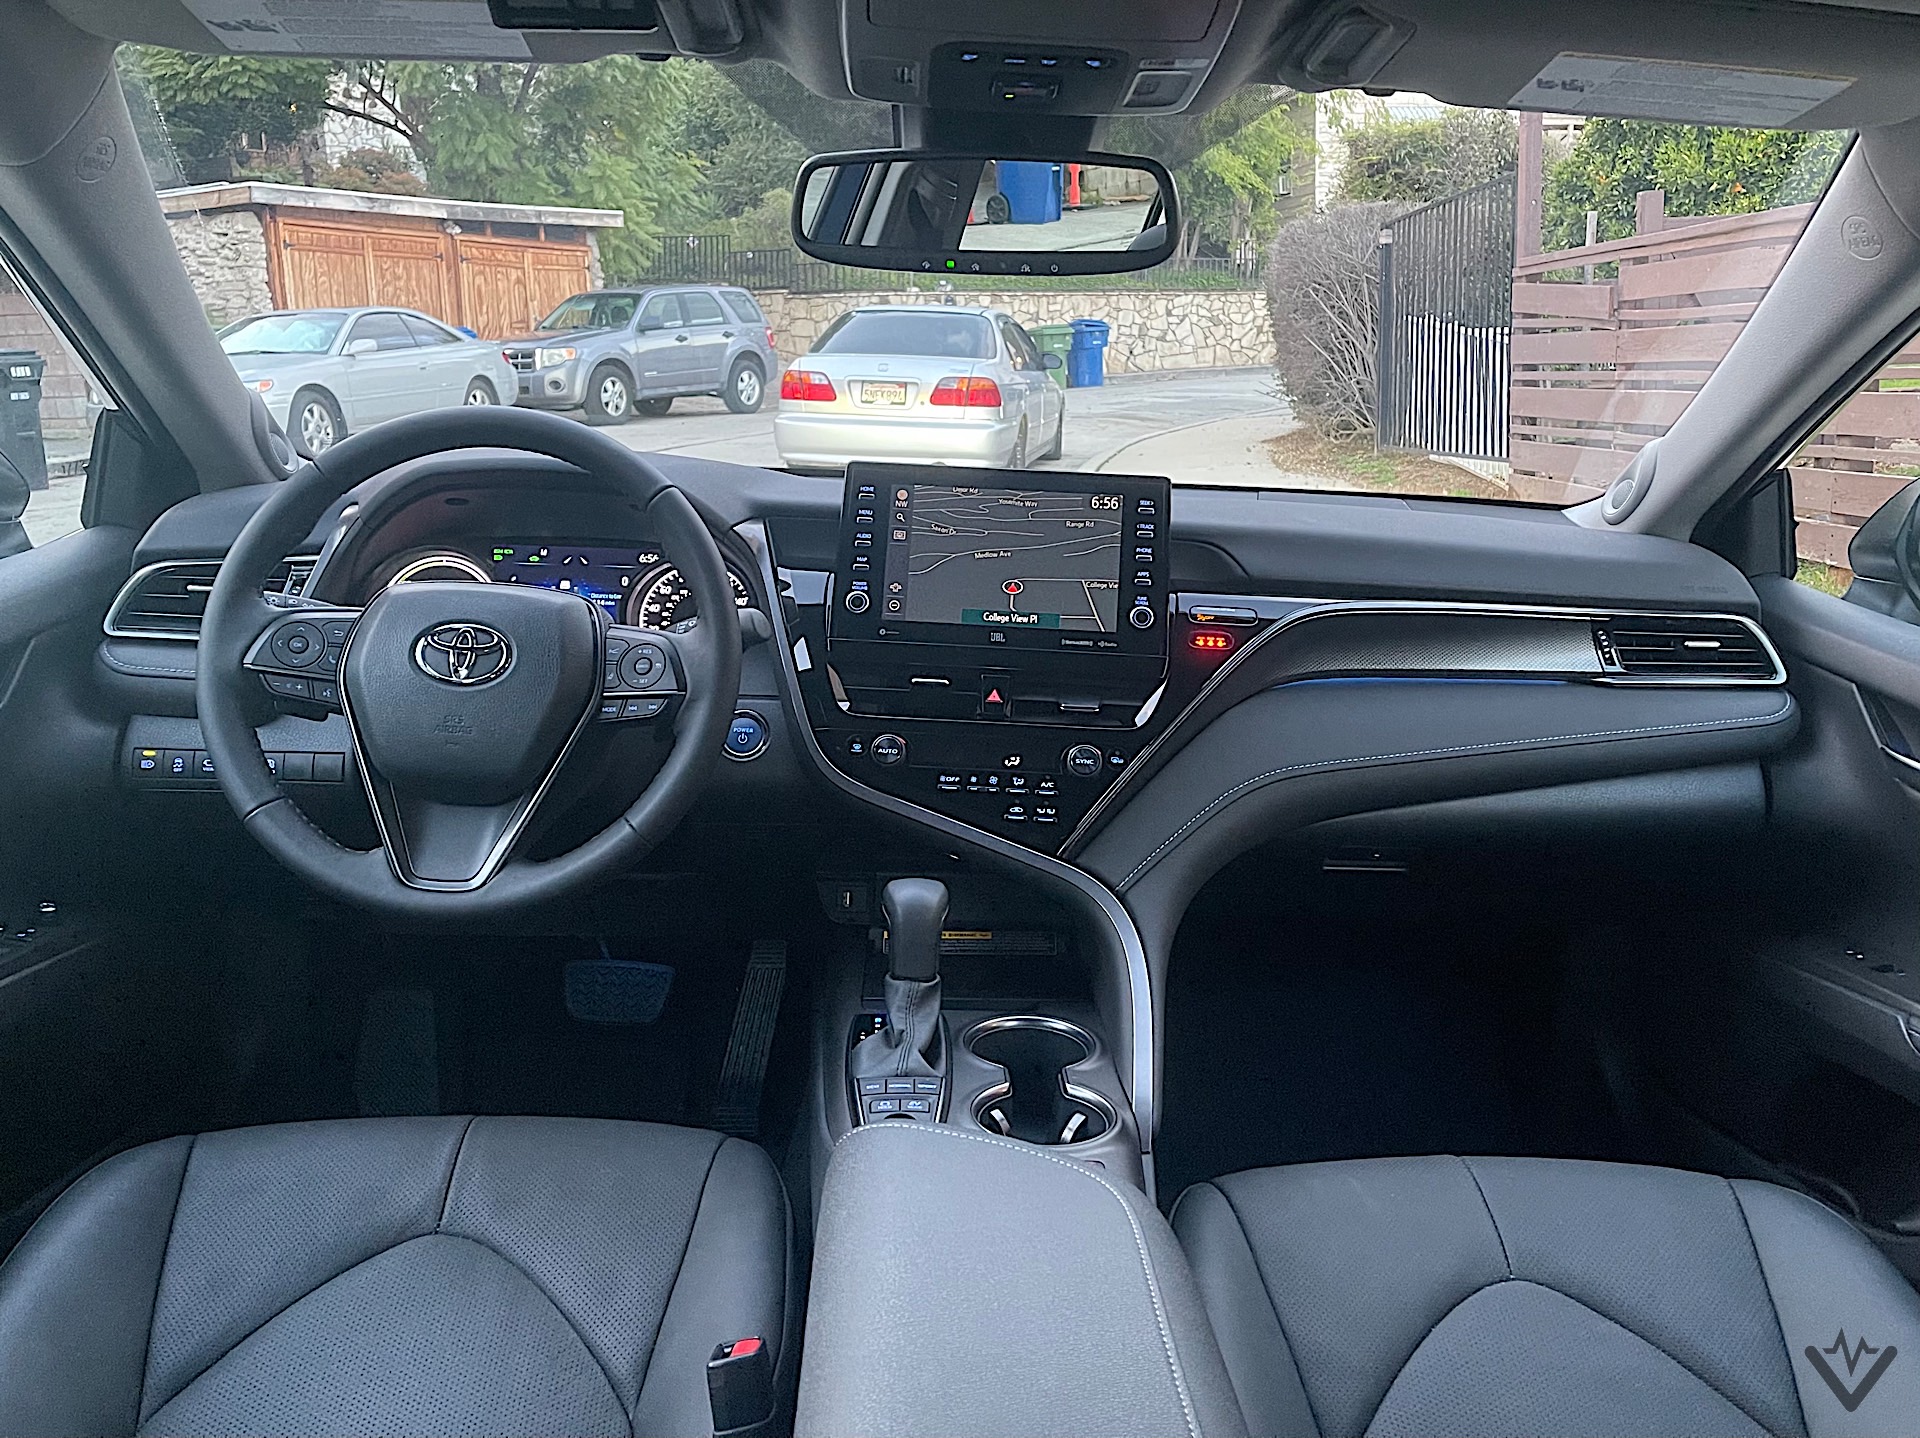 2021 Toyota Camry Hybrid interior 01 1